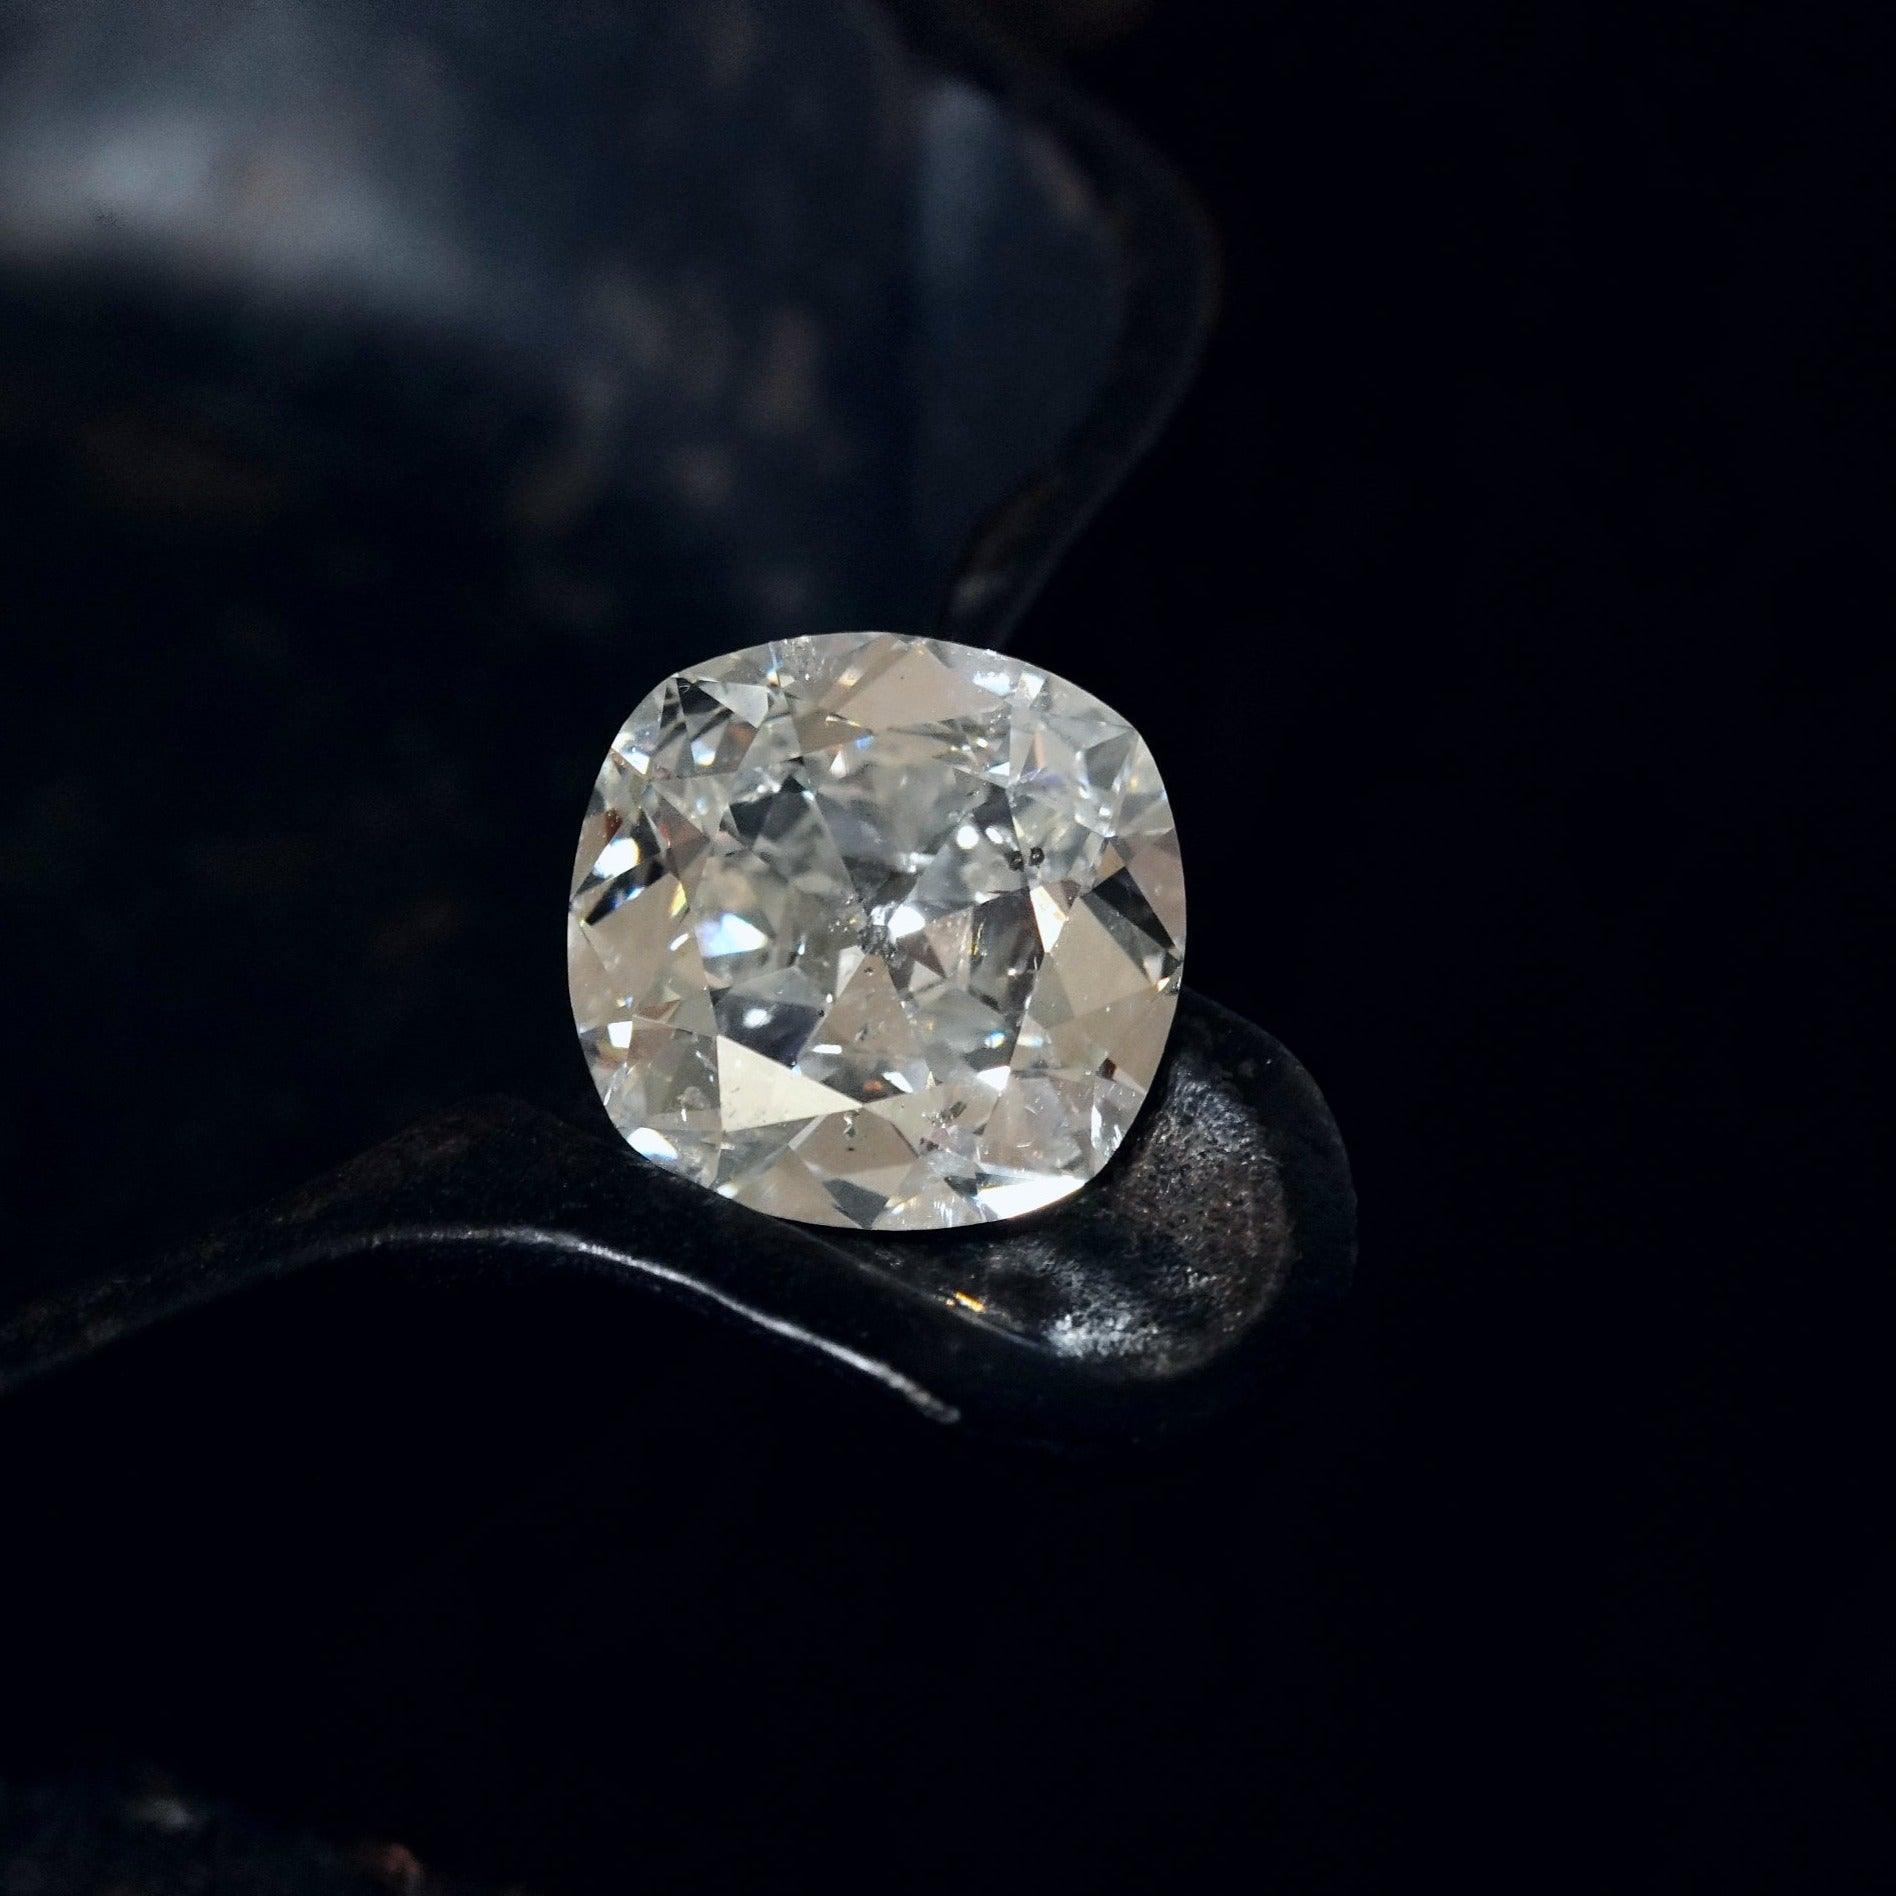 Victorian Era 17.58 CT Old Mine Cut Diamond - Bright White, Brilliant Quality, GIA Certified - Jogani